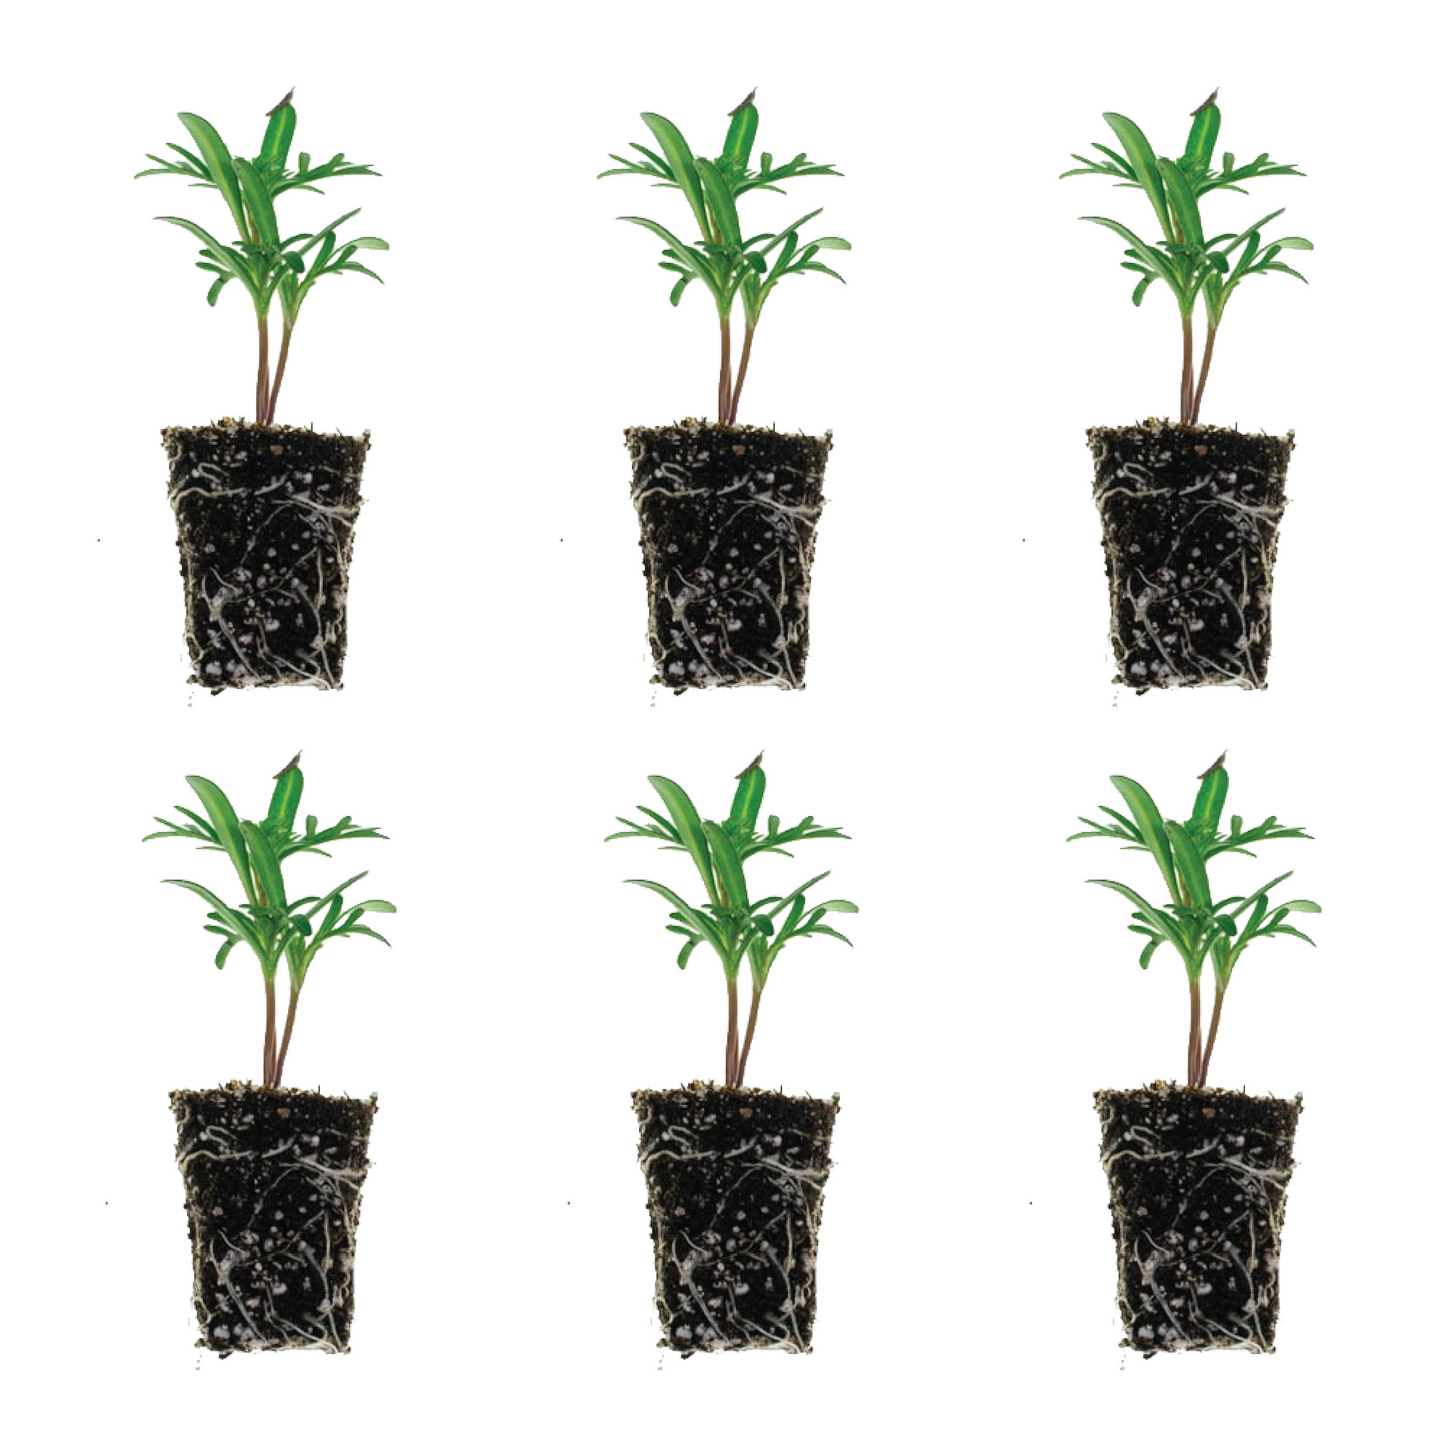 Cosmos Bipinnatus Casanova Mix Plantlings Live Baby Plants 1-3in., 6-Pack